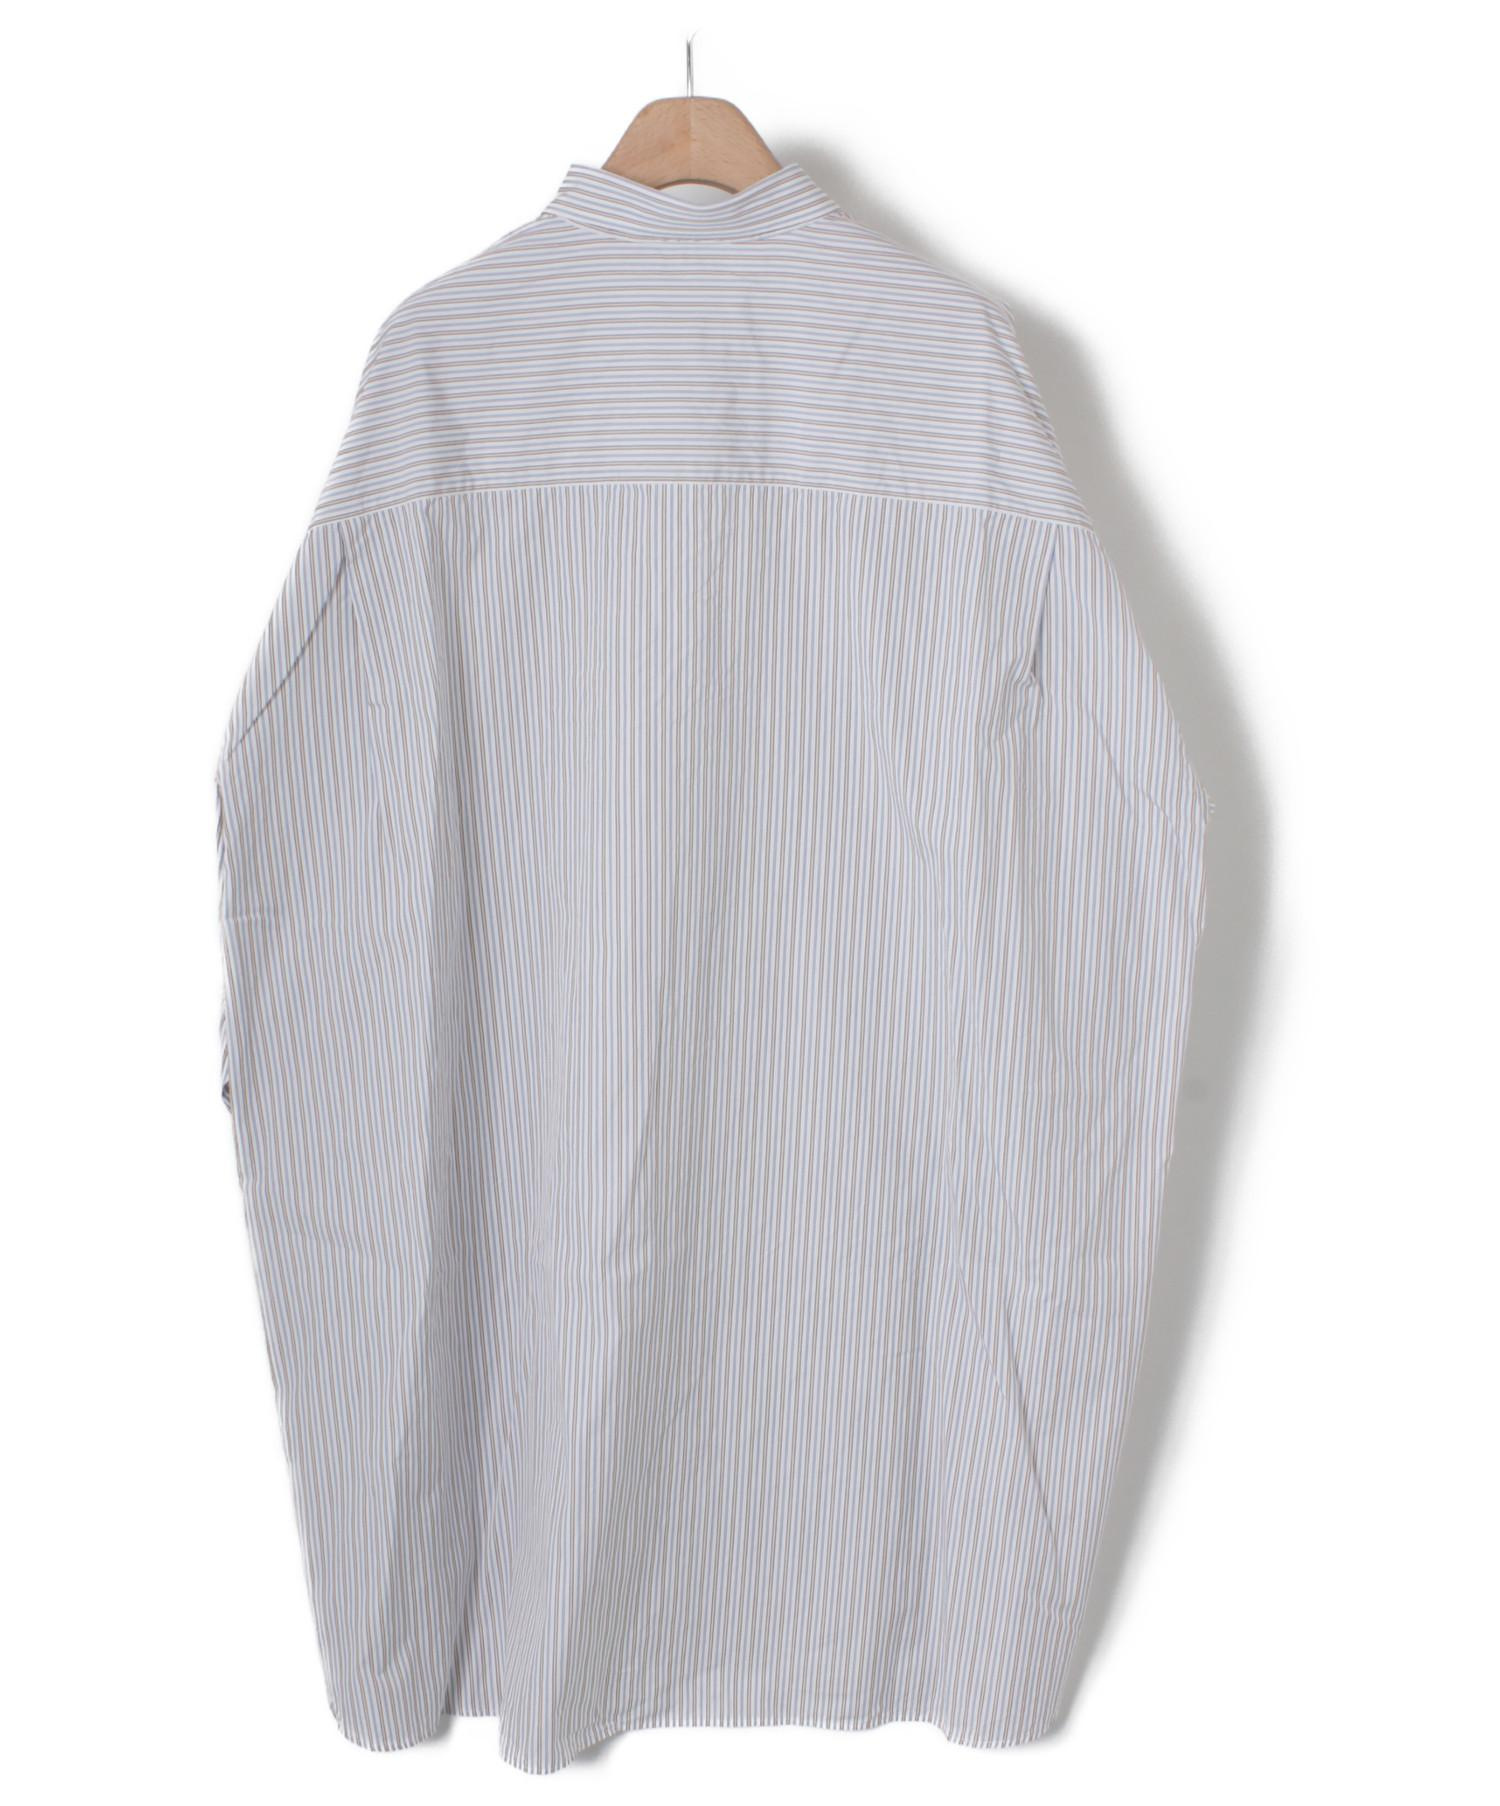 Maison Margiela (メゾン マルジェラ) ストライプオーバーサイズシャツ サイズ:XXS